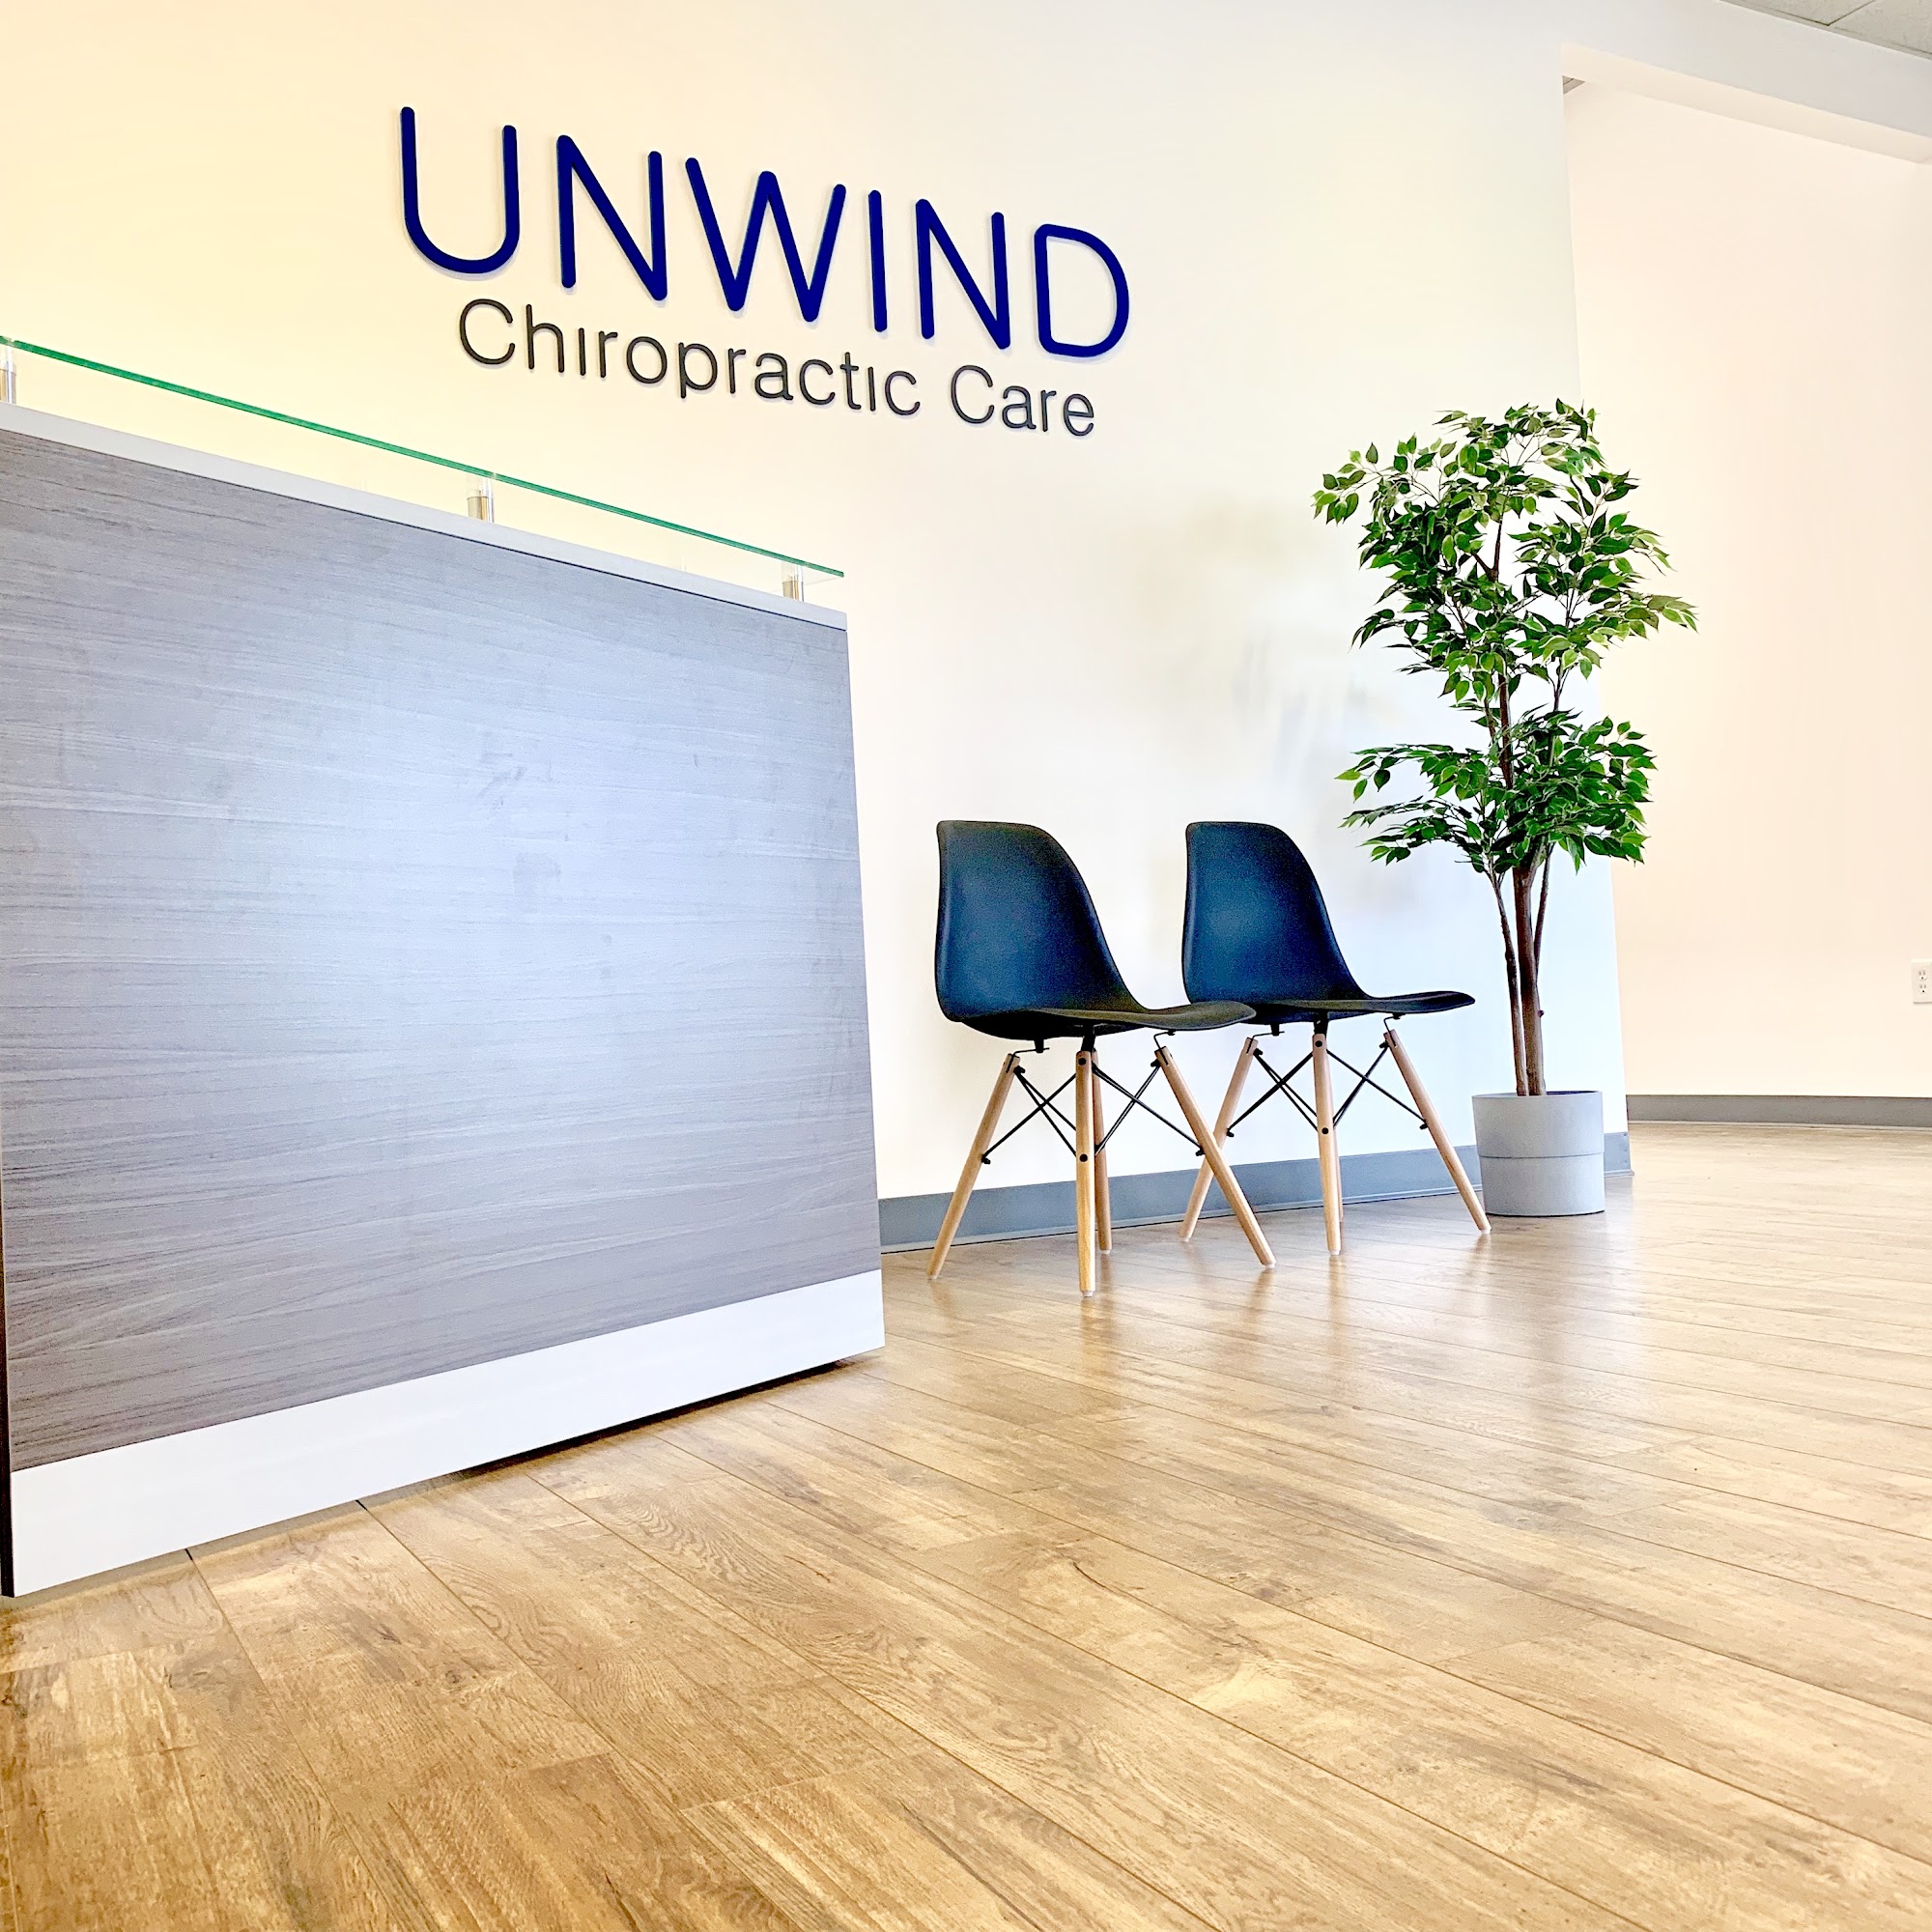 Unwind Chiropractic Care